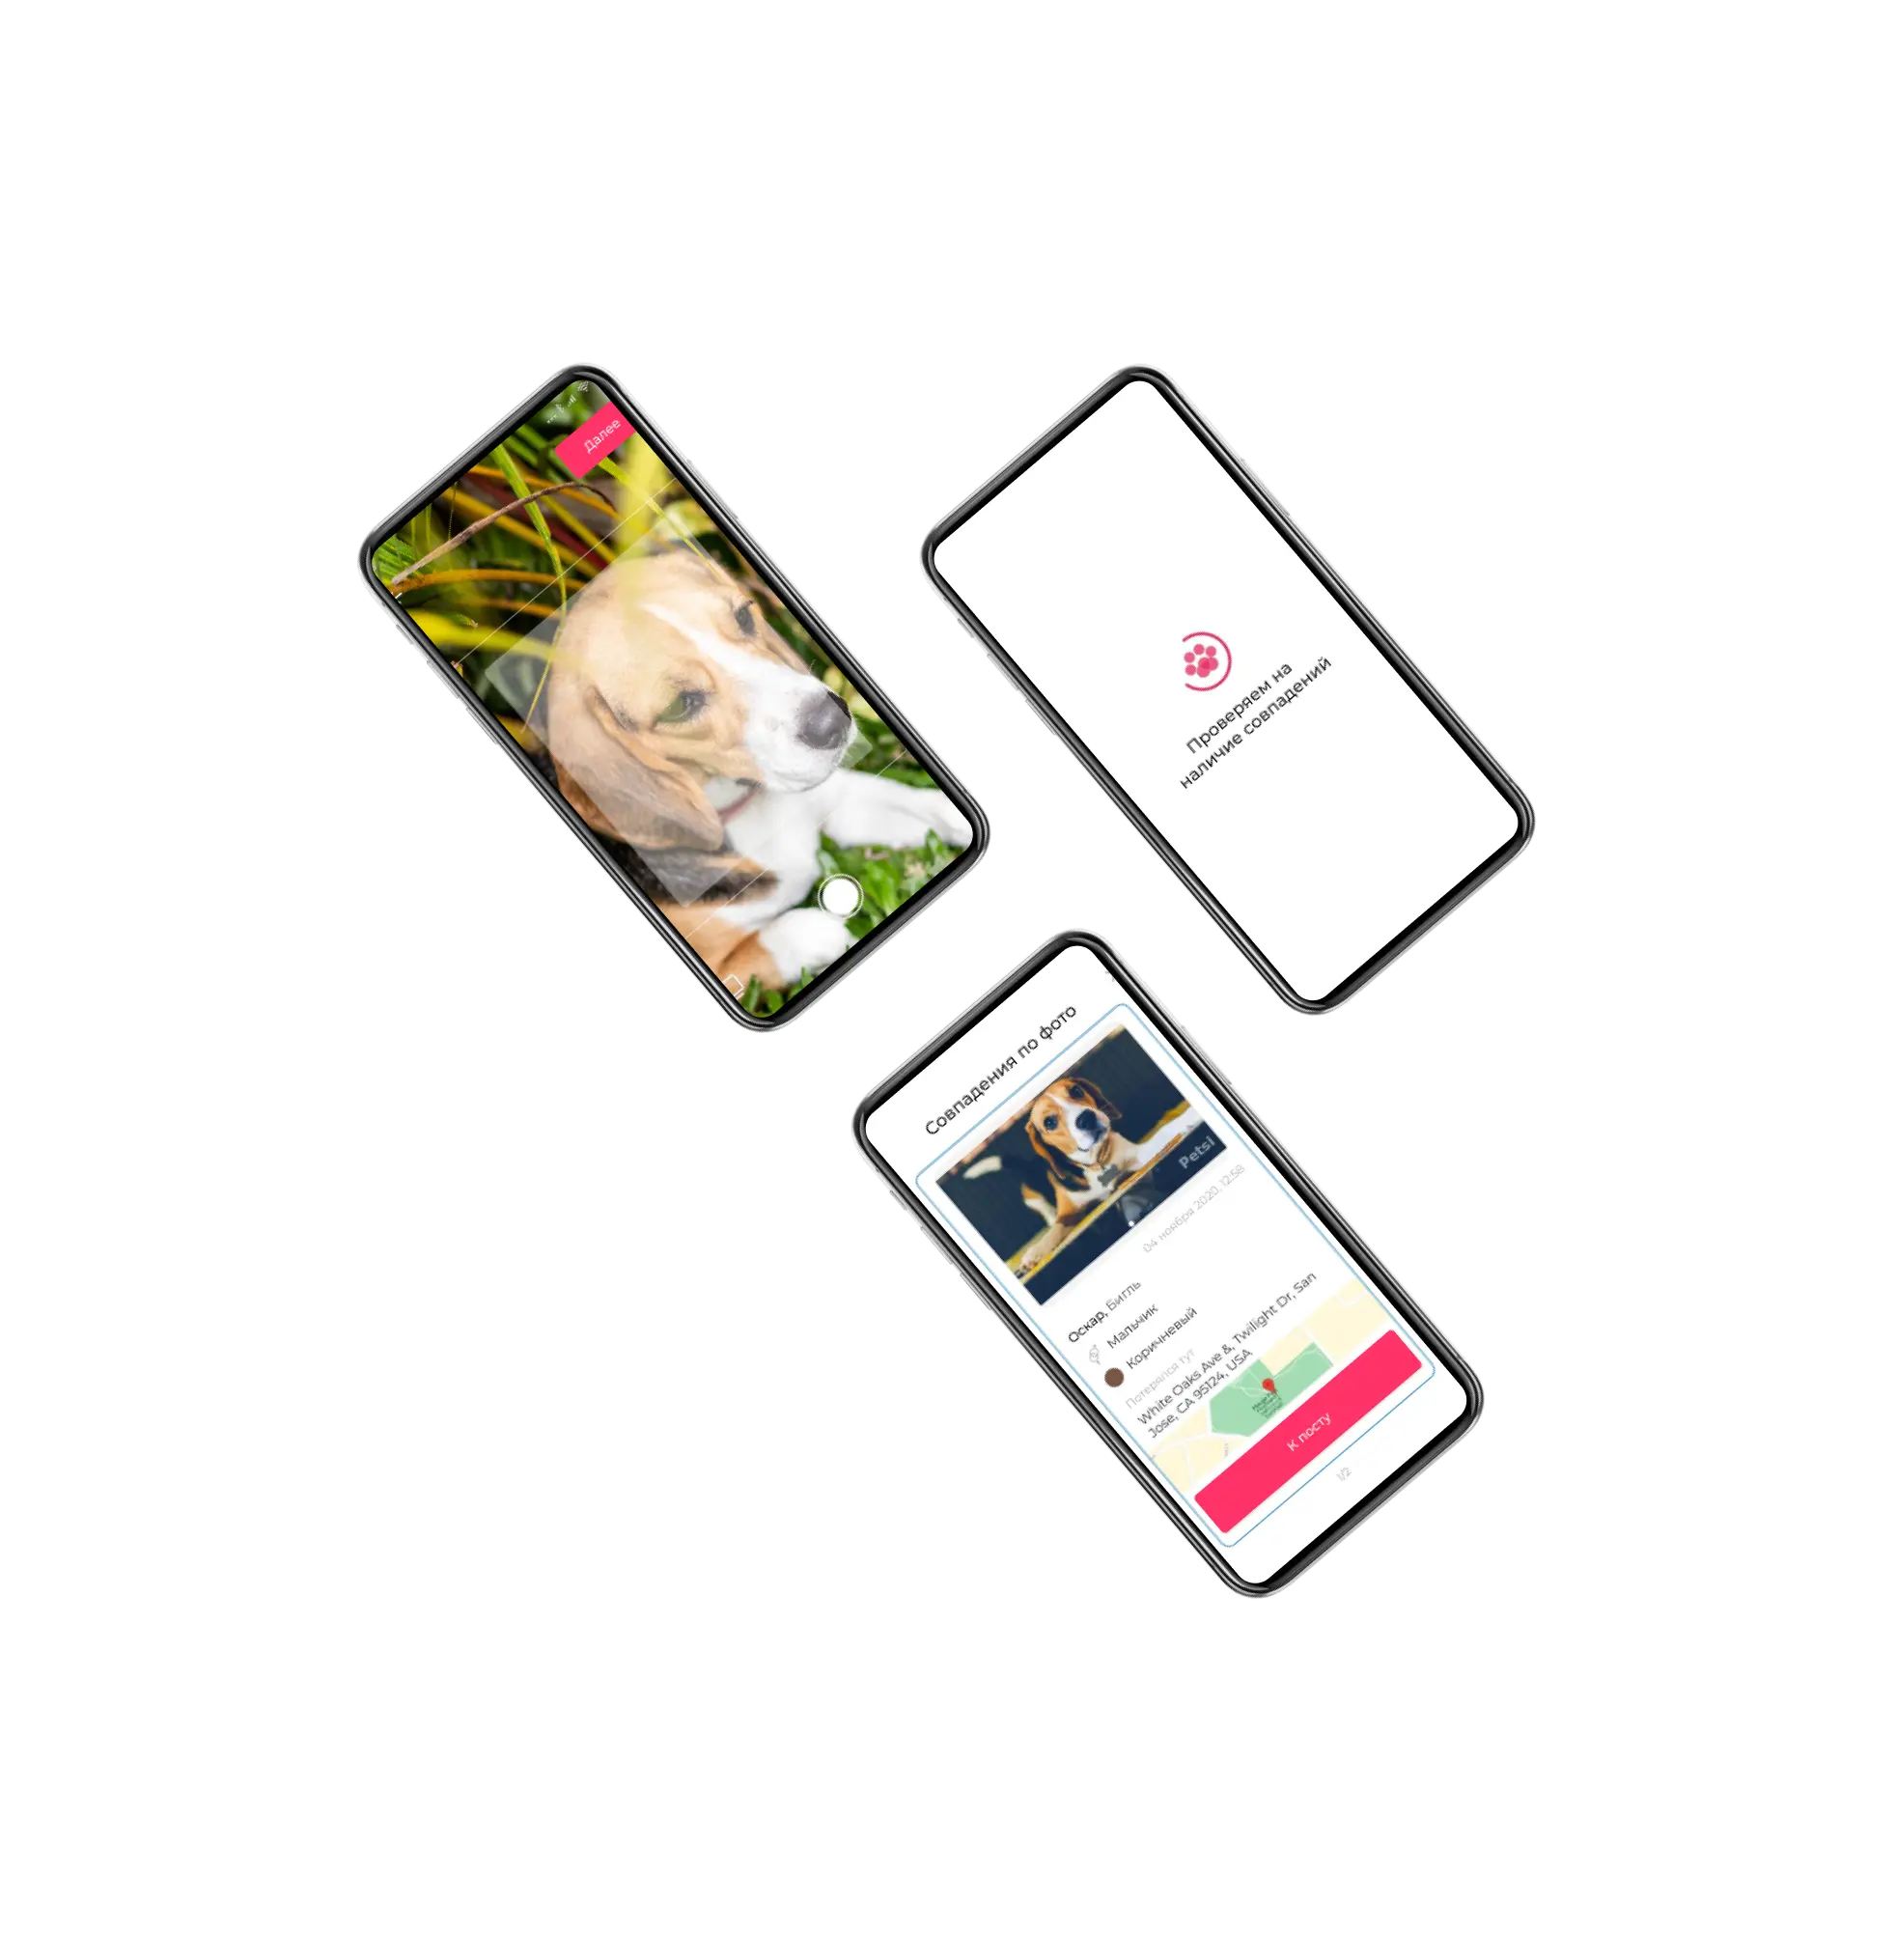 Petsi - facial recognition app for lost pets